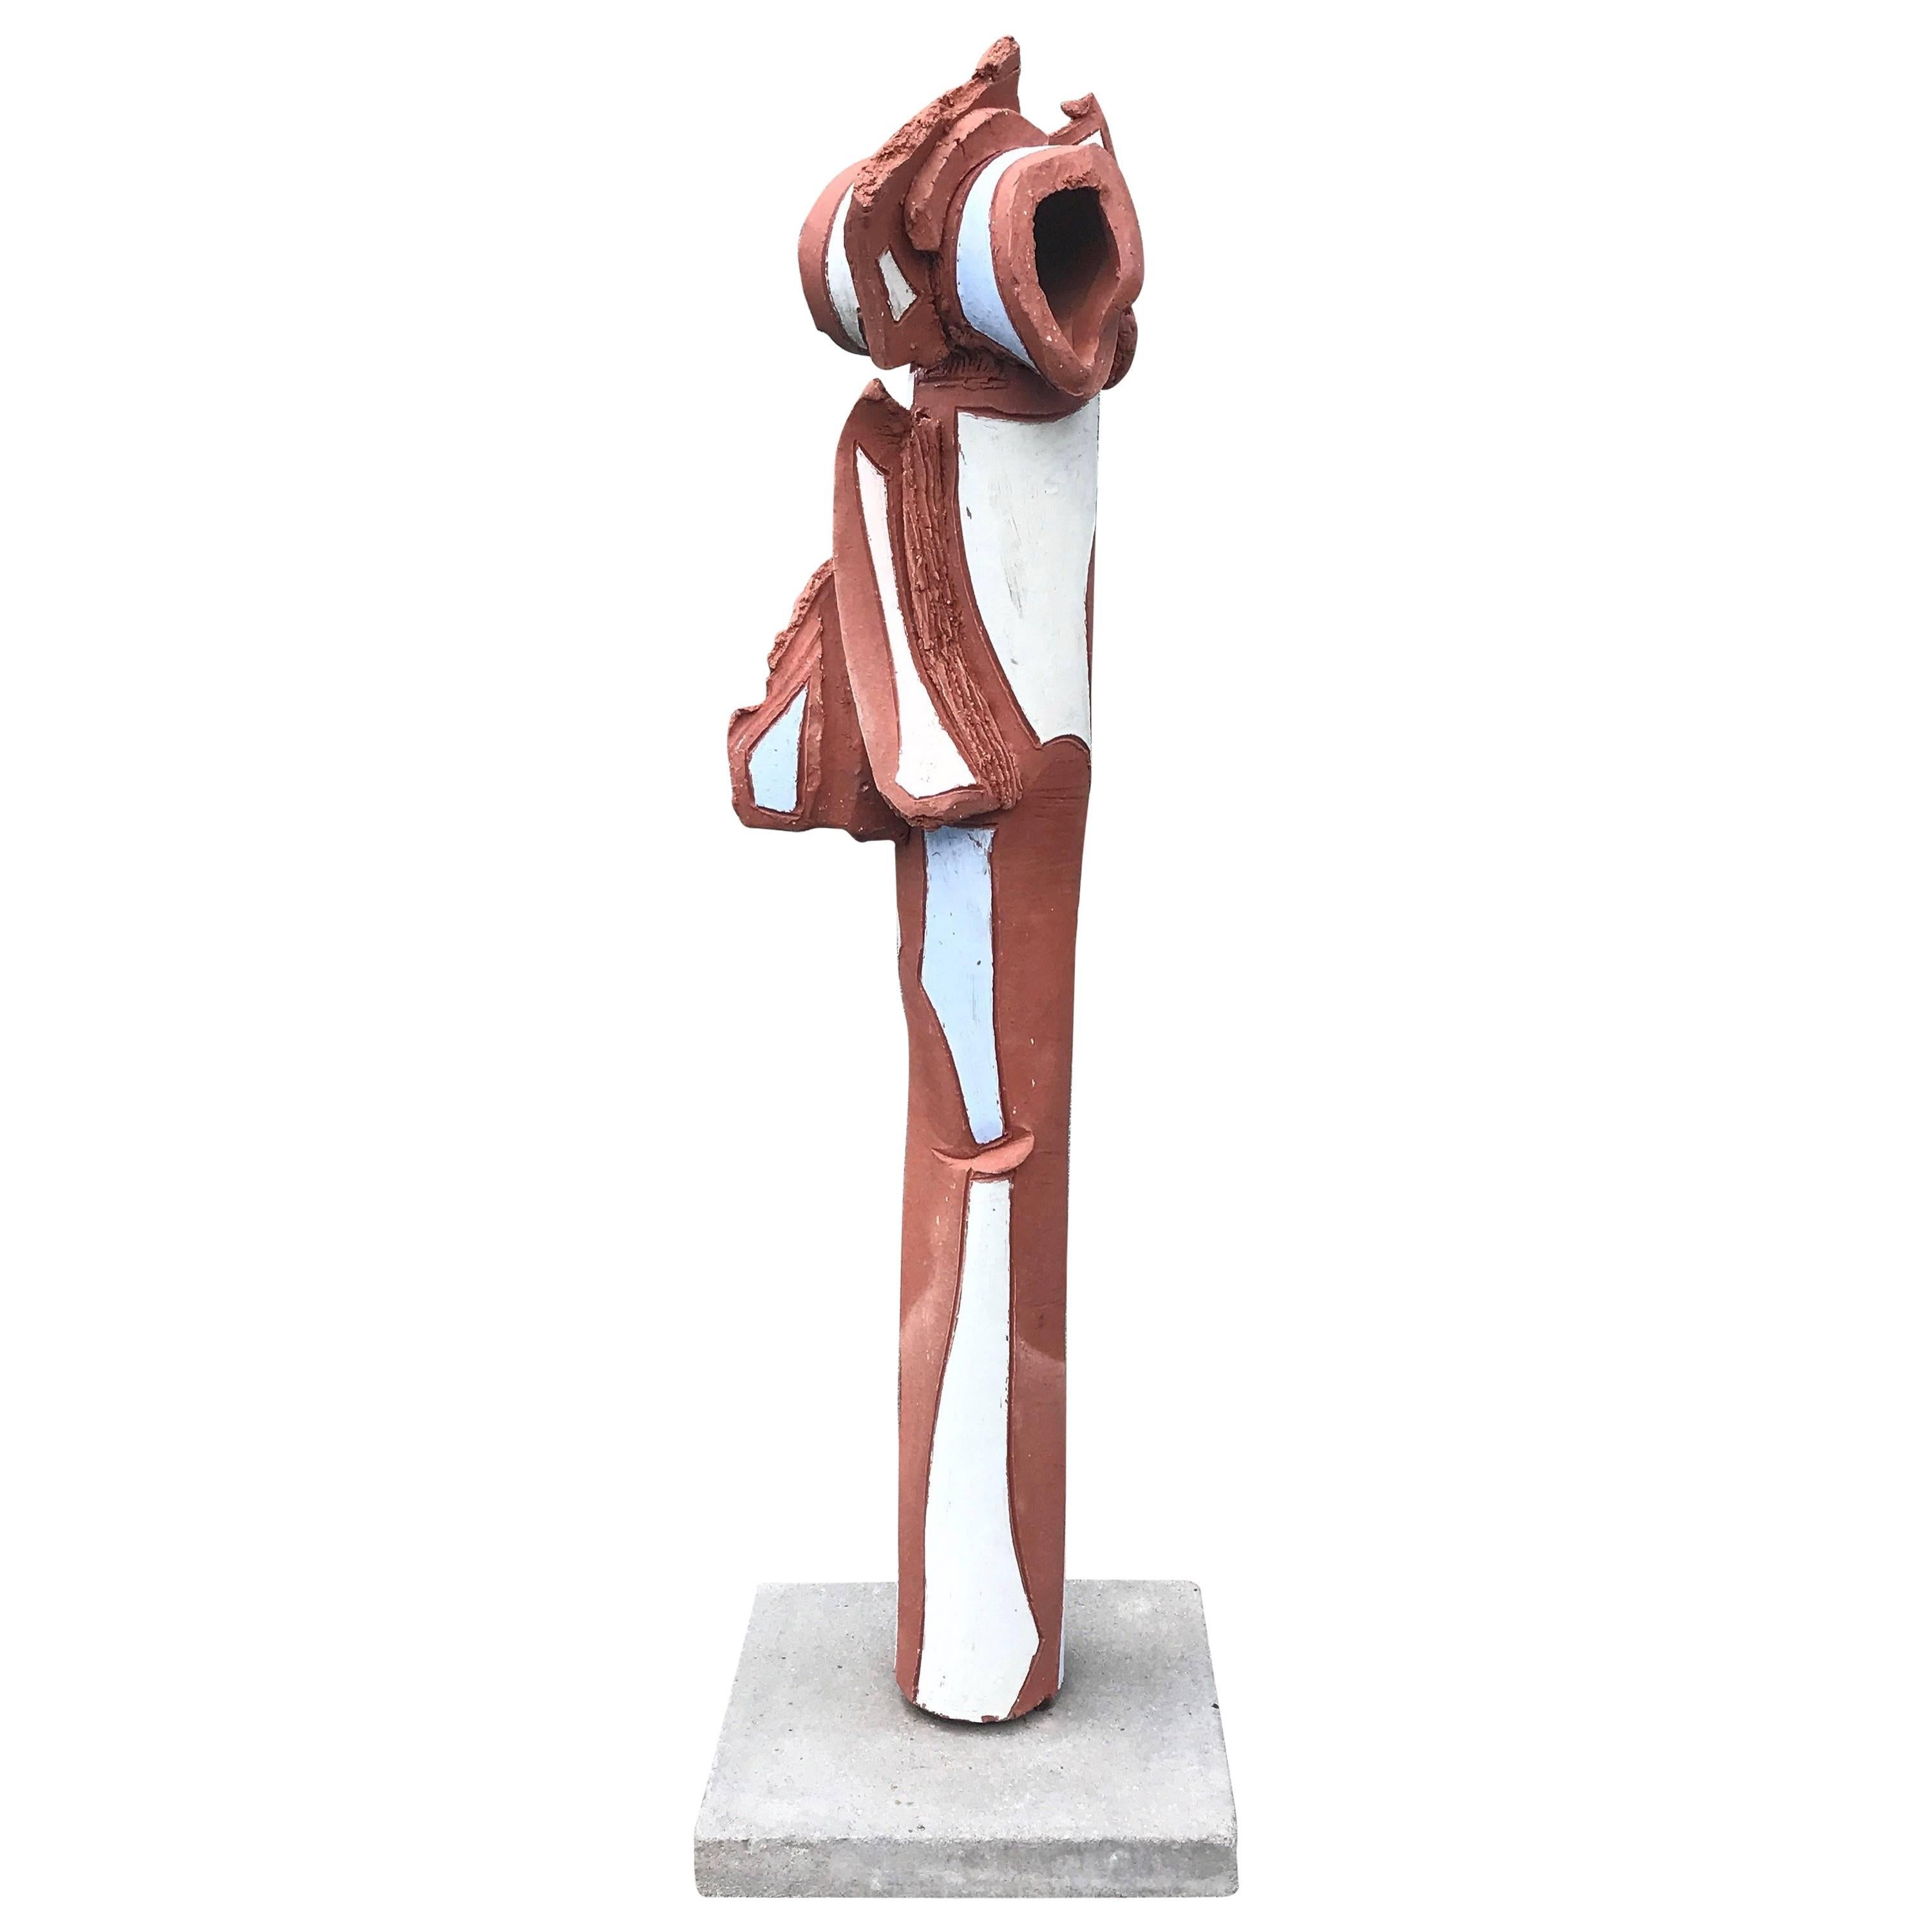 Bay Area Large Glazed Ceramic Abstract or Brutalist TOTEM Sculpture #2 For Sale